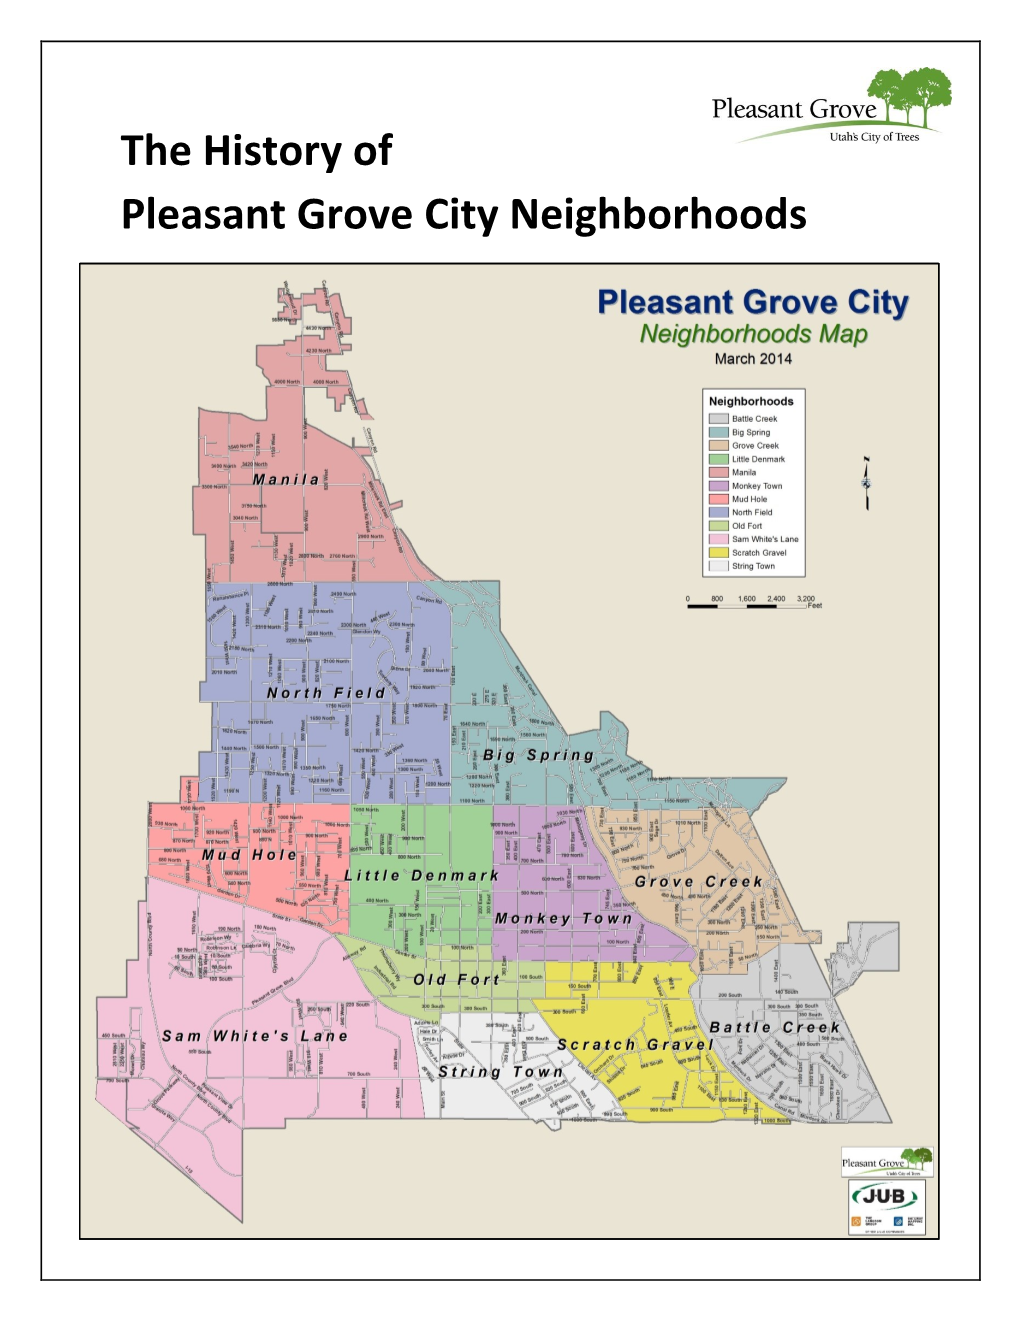 The History of Pleasant Grove City Neighborhoods